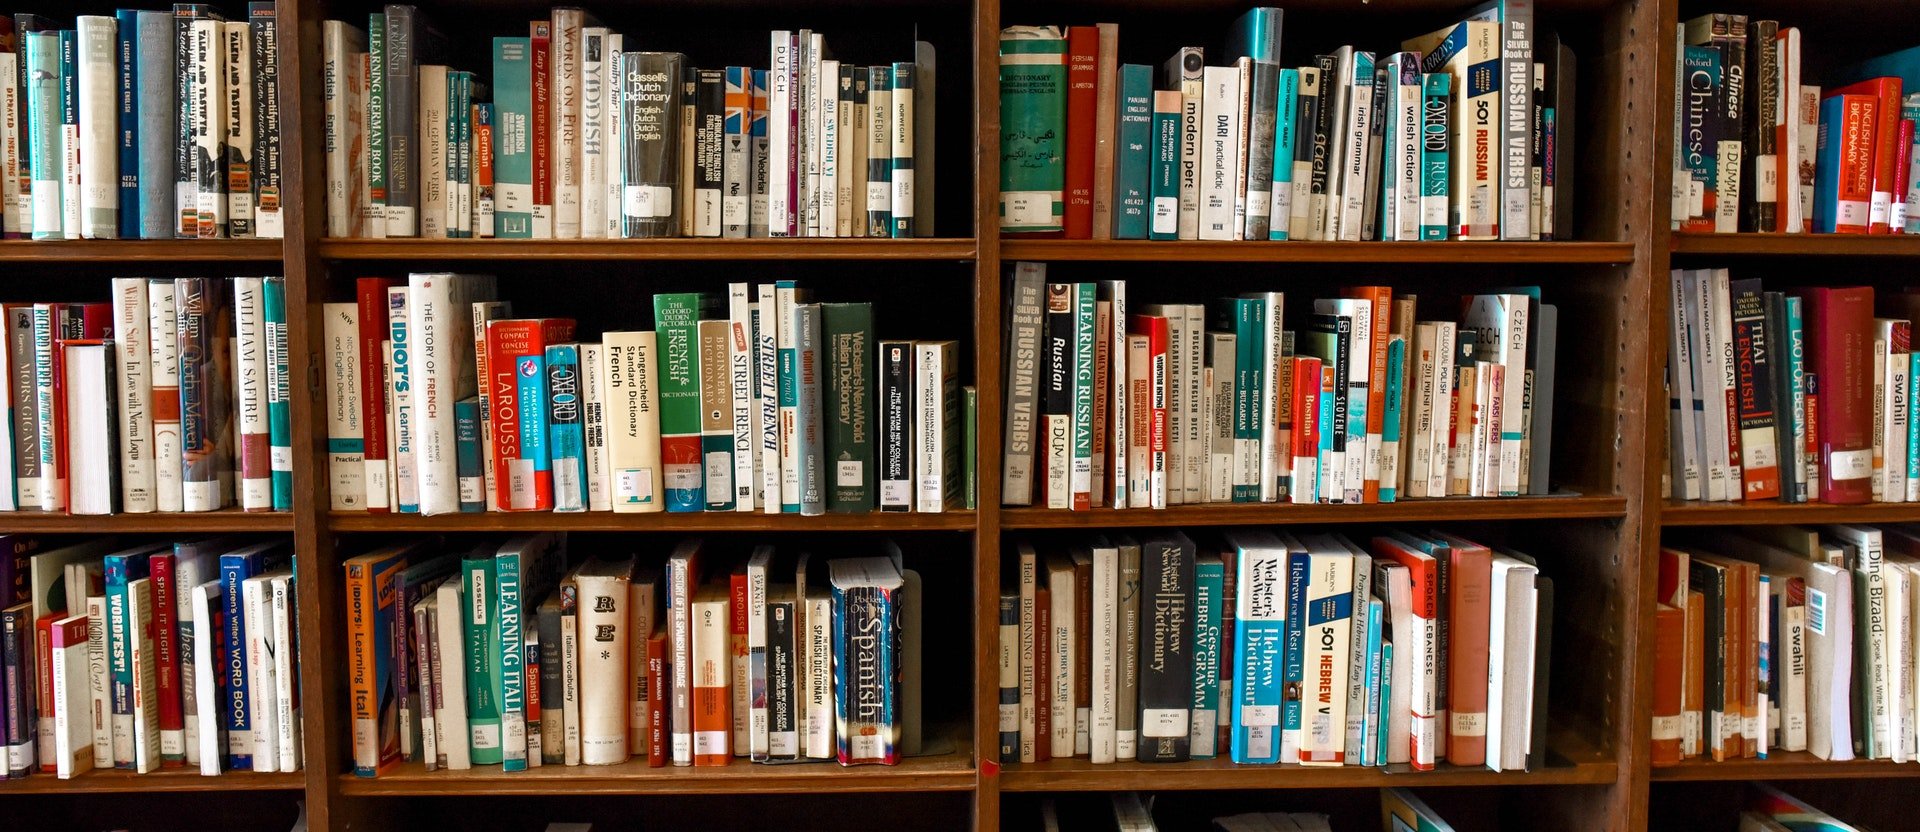 Bookcase full of books